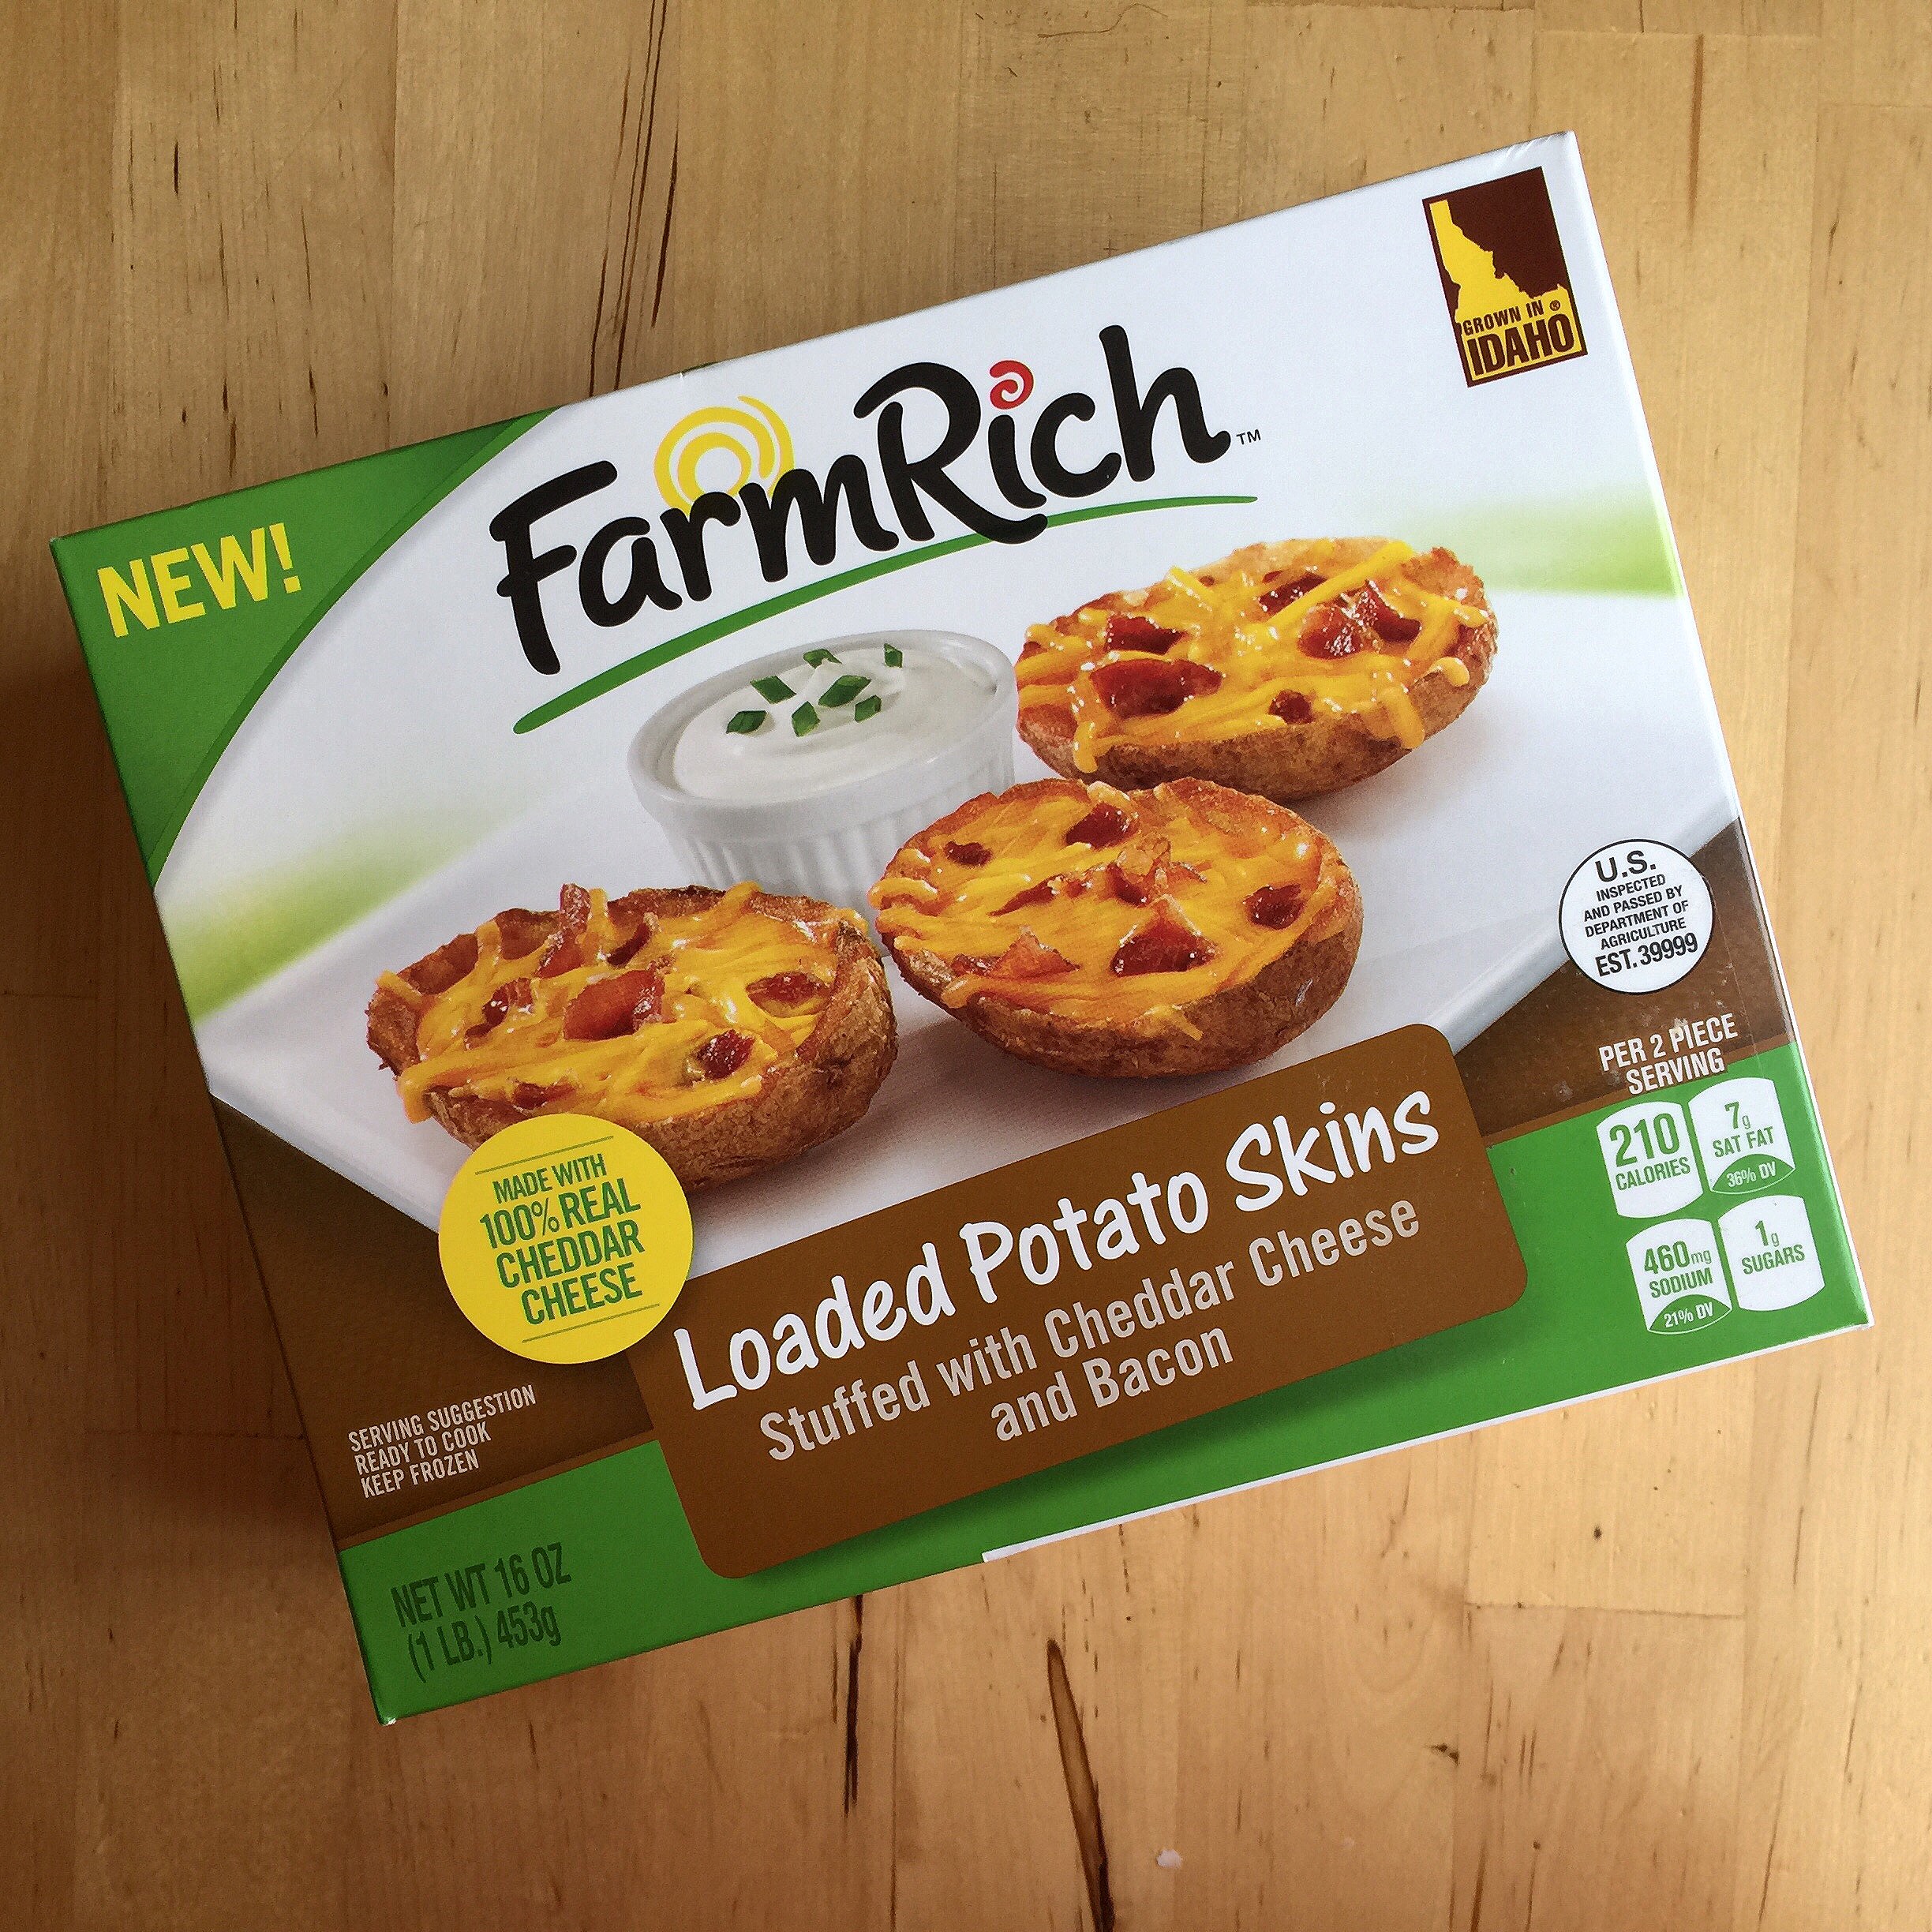 Make Real Life Good With Farm Rich Foods! © www.roastedbeanz.com #MomsWingMan #FarmRichSnacks #ad #collectivebias #shop